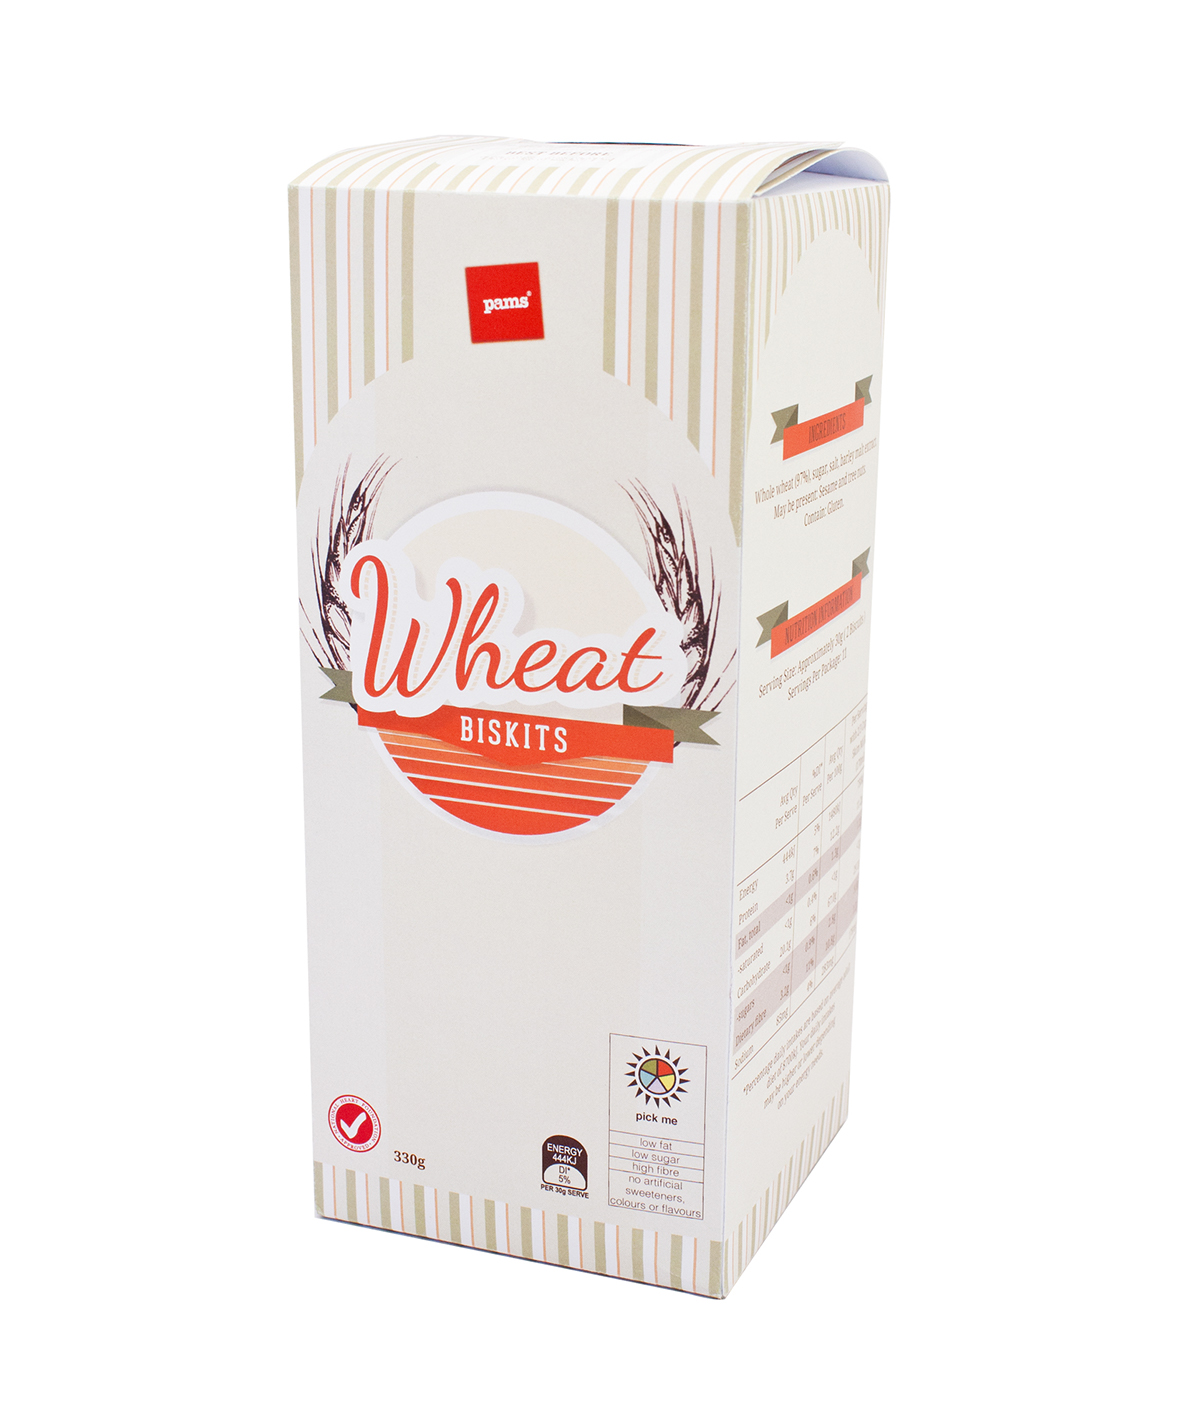 wheat biskits  pams YOOBEE cereal box